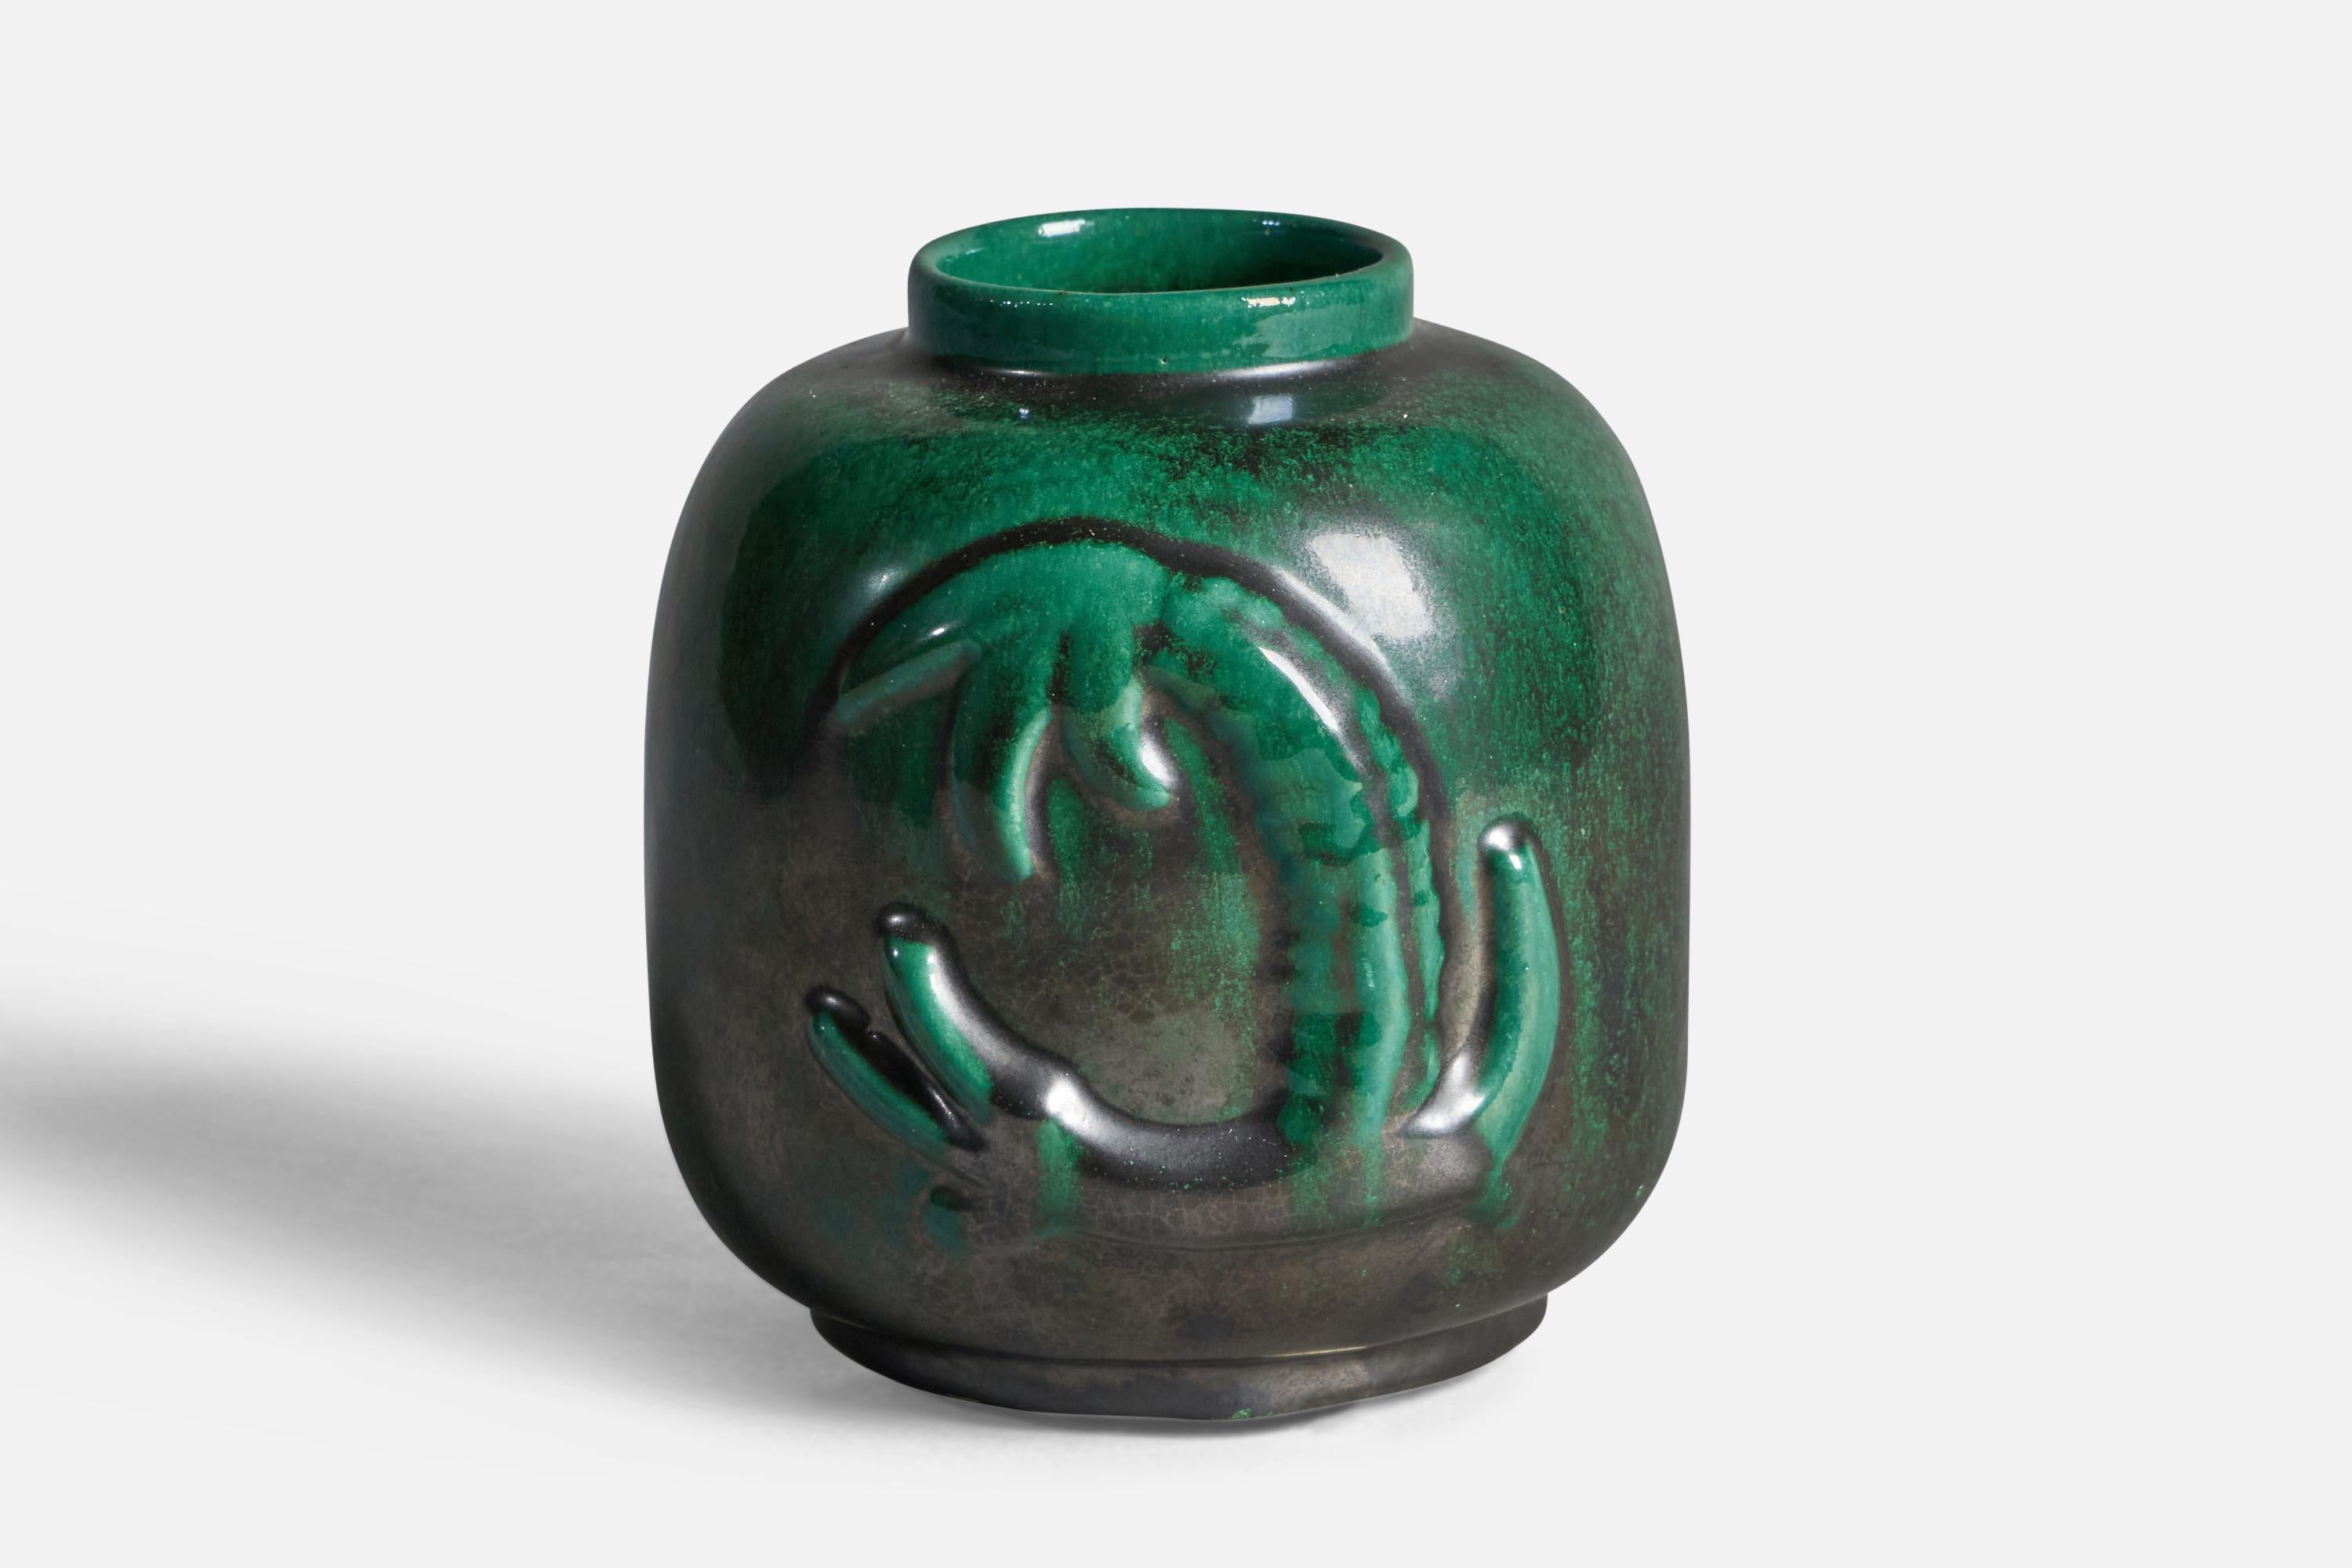 A green-glazed stoneware vase, designed and produced by Upsala Ekeby, Sweden, 1930s.